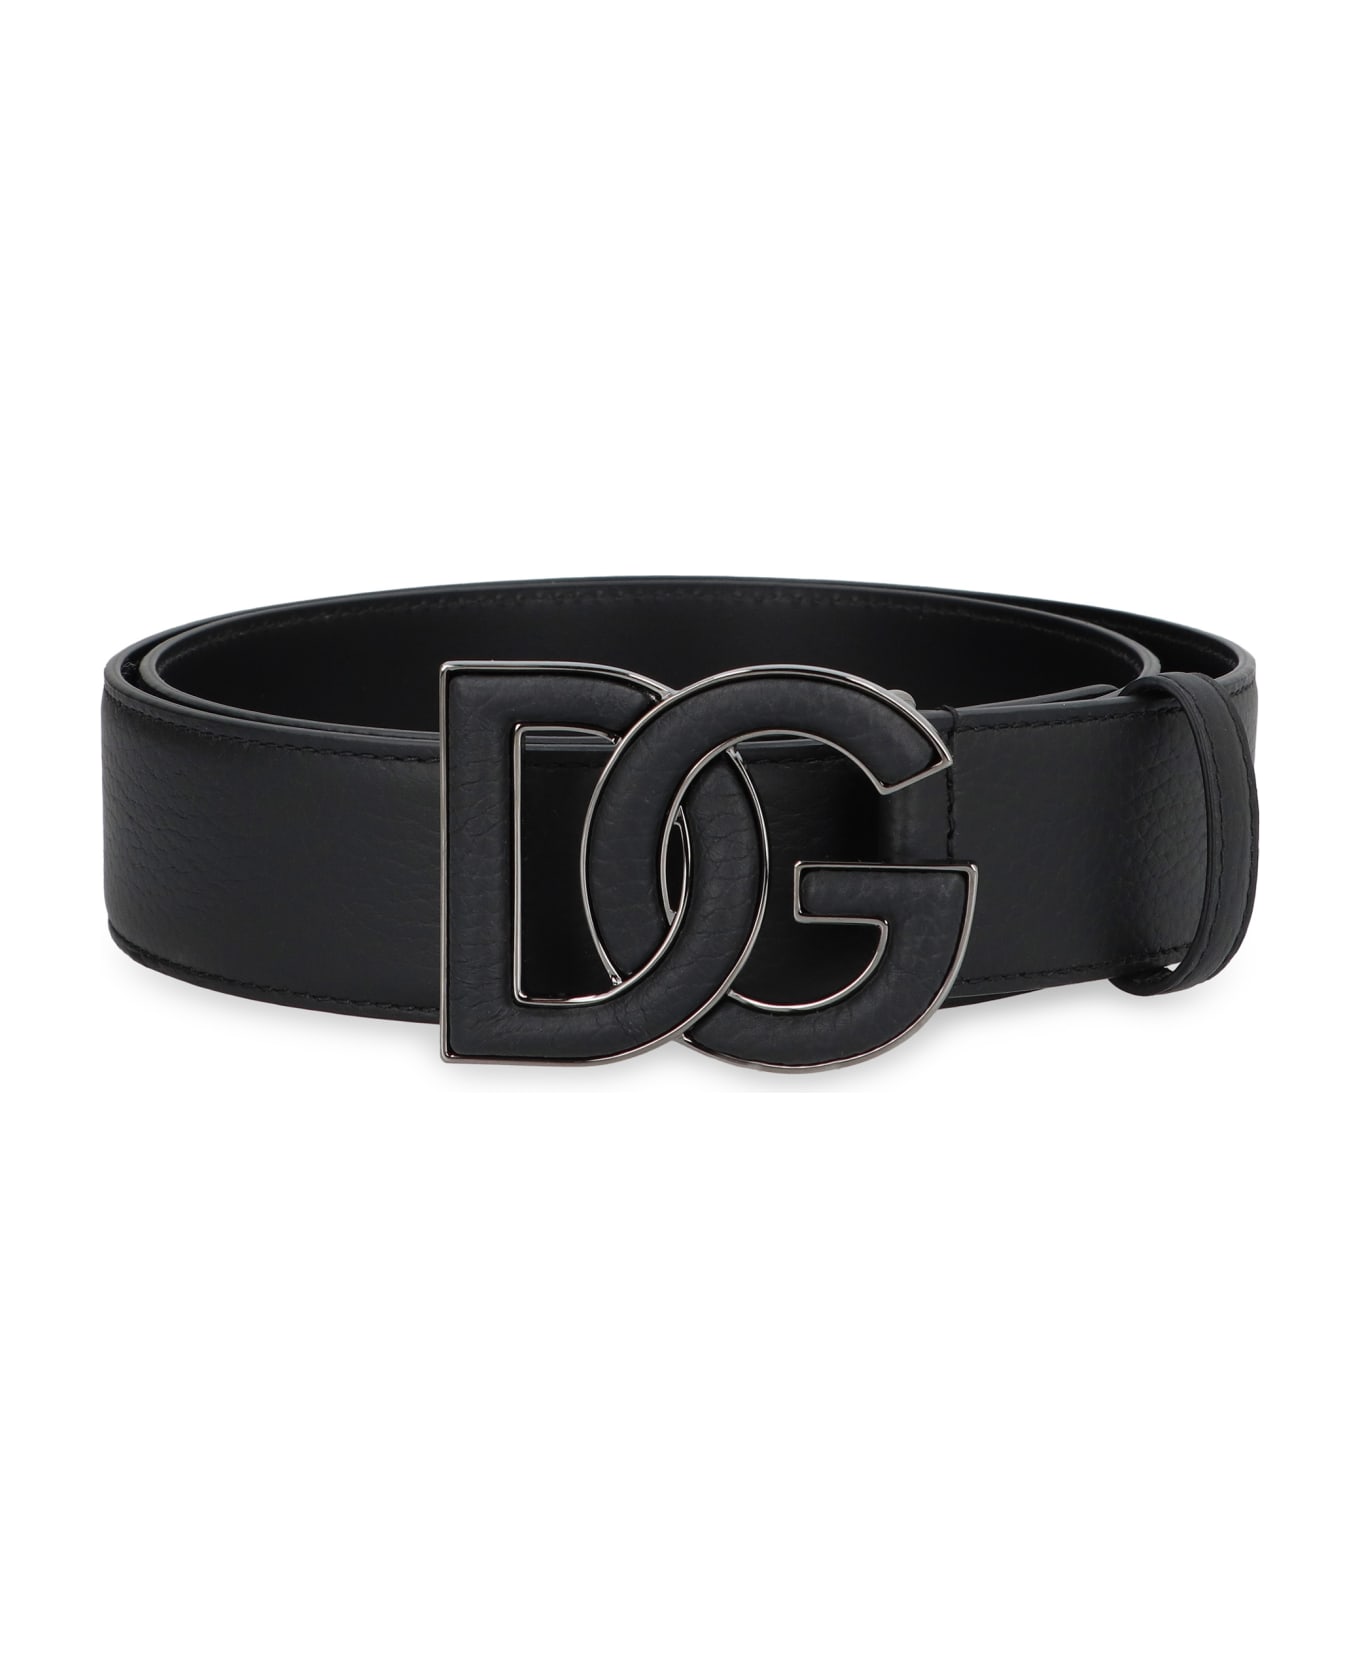 Dolce & Gabbana Calf Leather Belt With Buckle - NERO (Black)